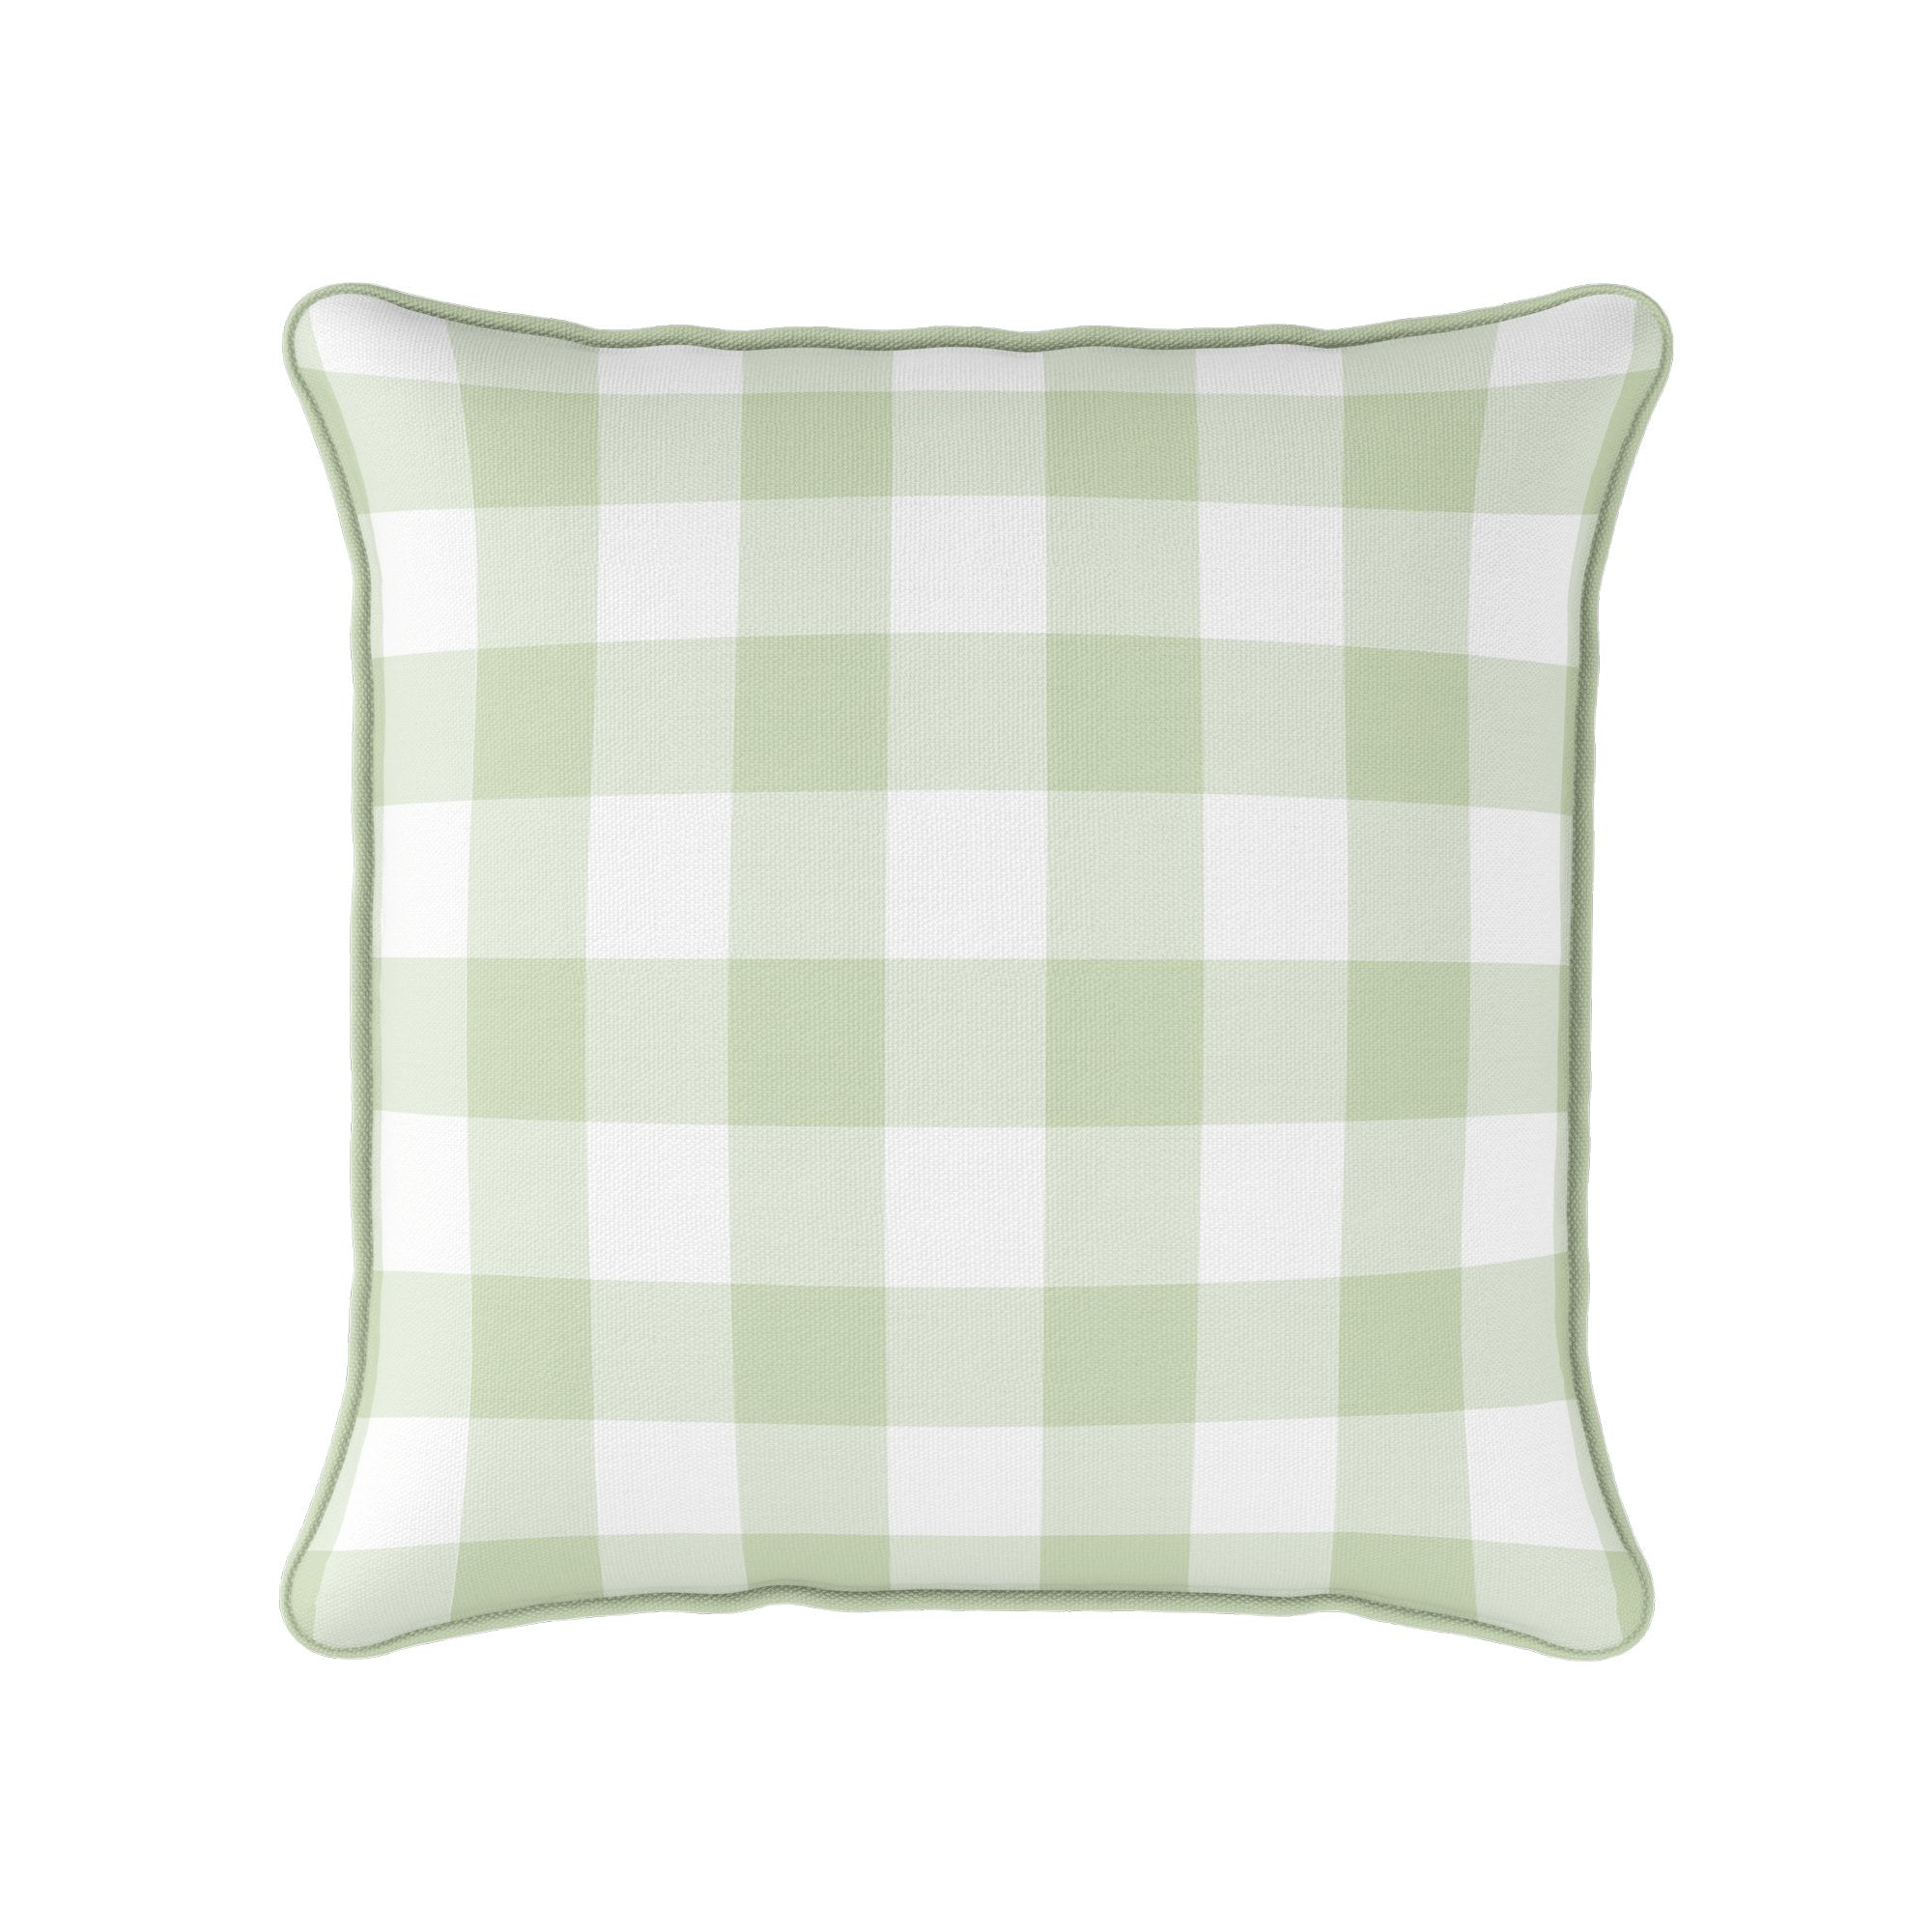 Gingham Check Medium Cushion - Greens - Hydrangea Lane Home